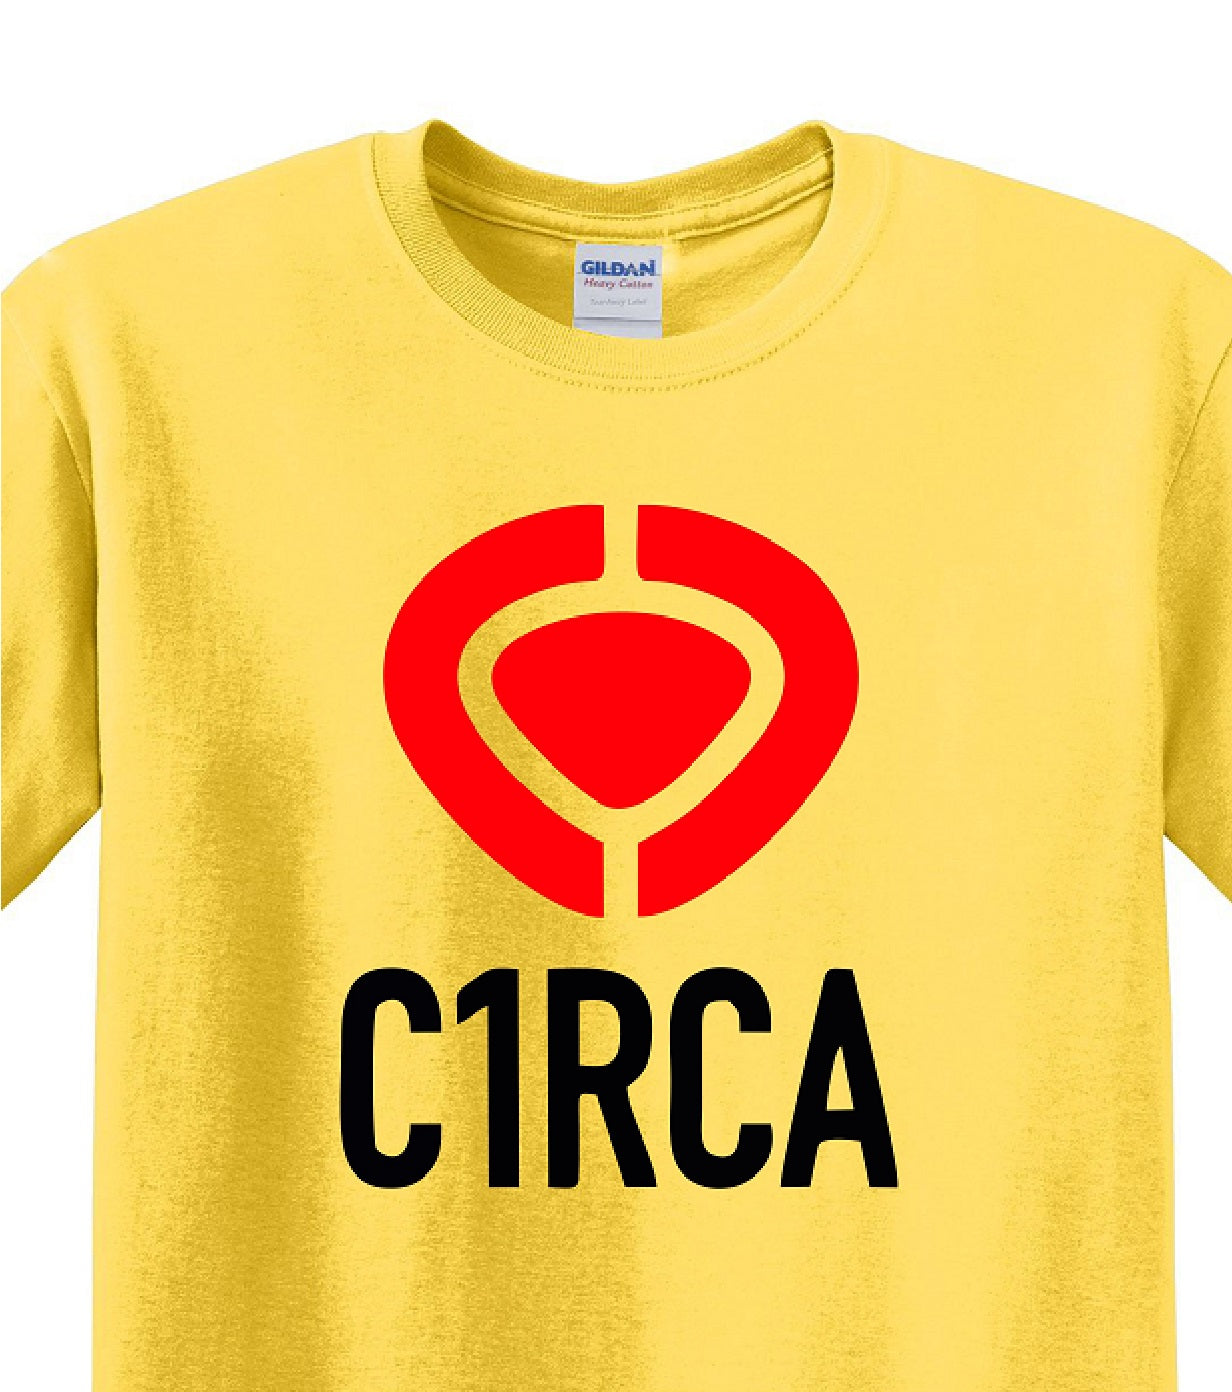 Skate Men's Shirt - Circa (Yellow) - MYSTYLEMYCLOTHING